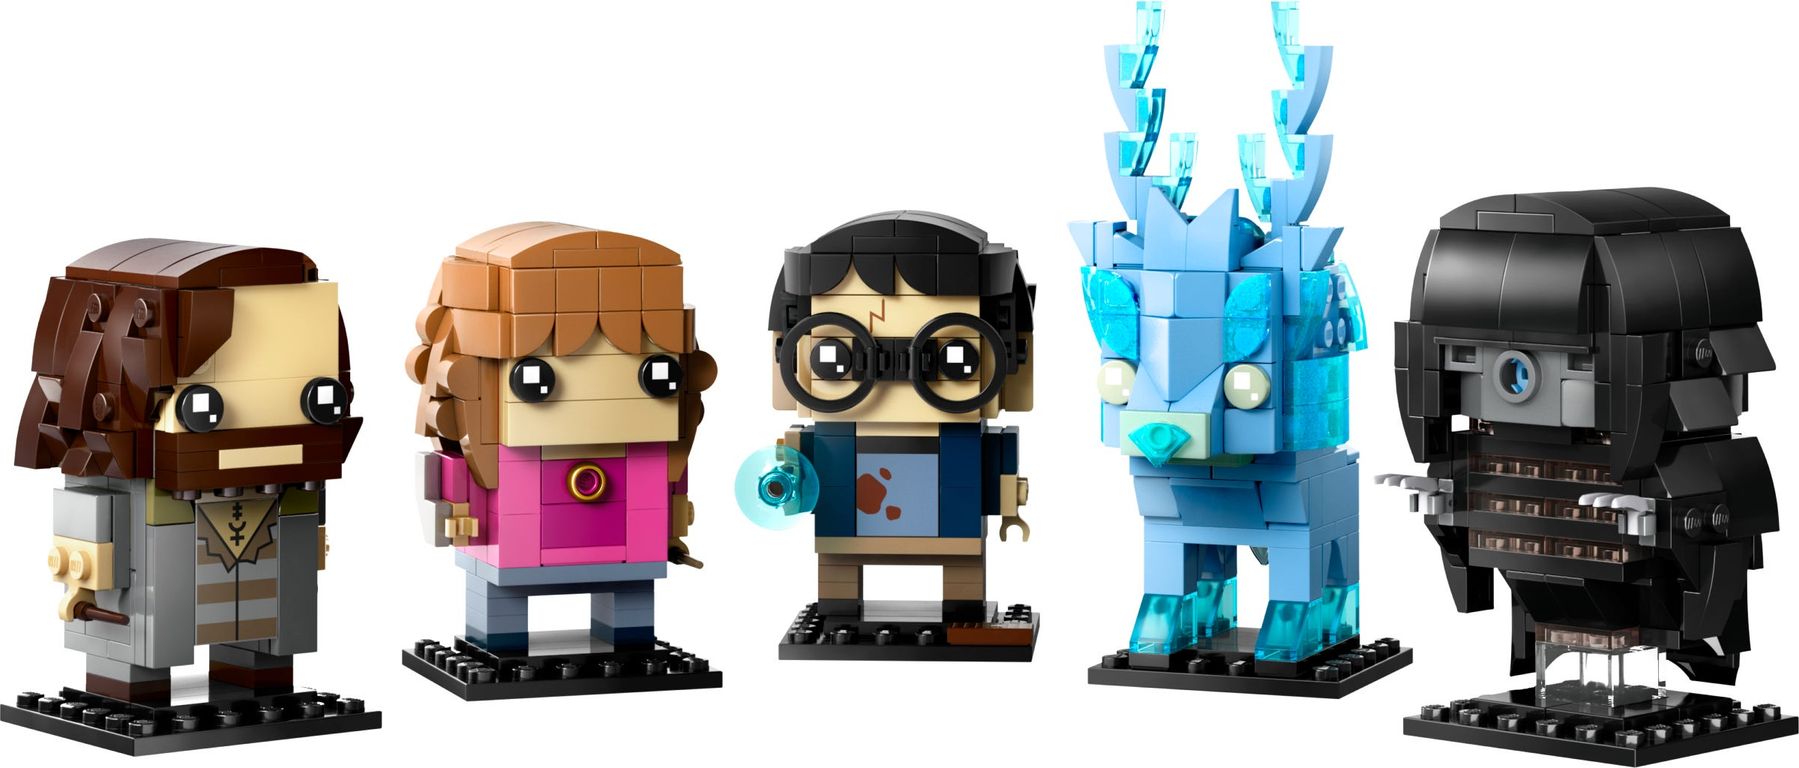 LEGO® BrickHeadz™ Prisoner of Azkaban Figures components